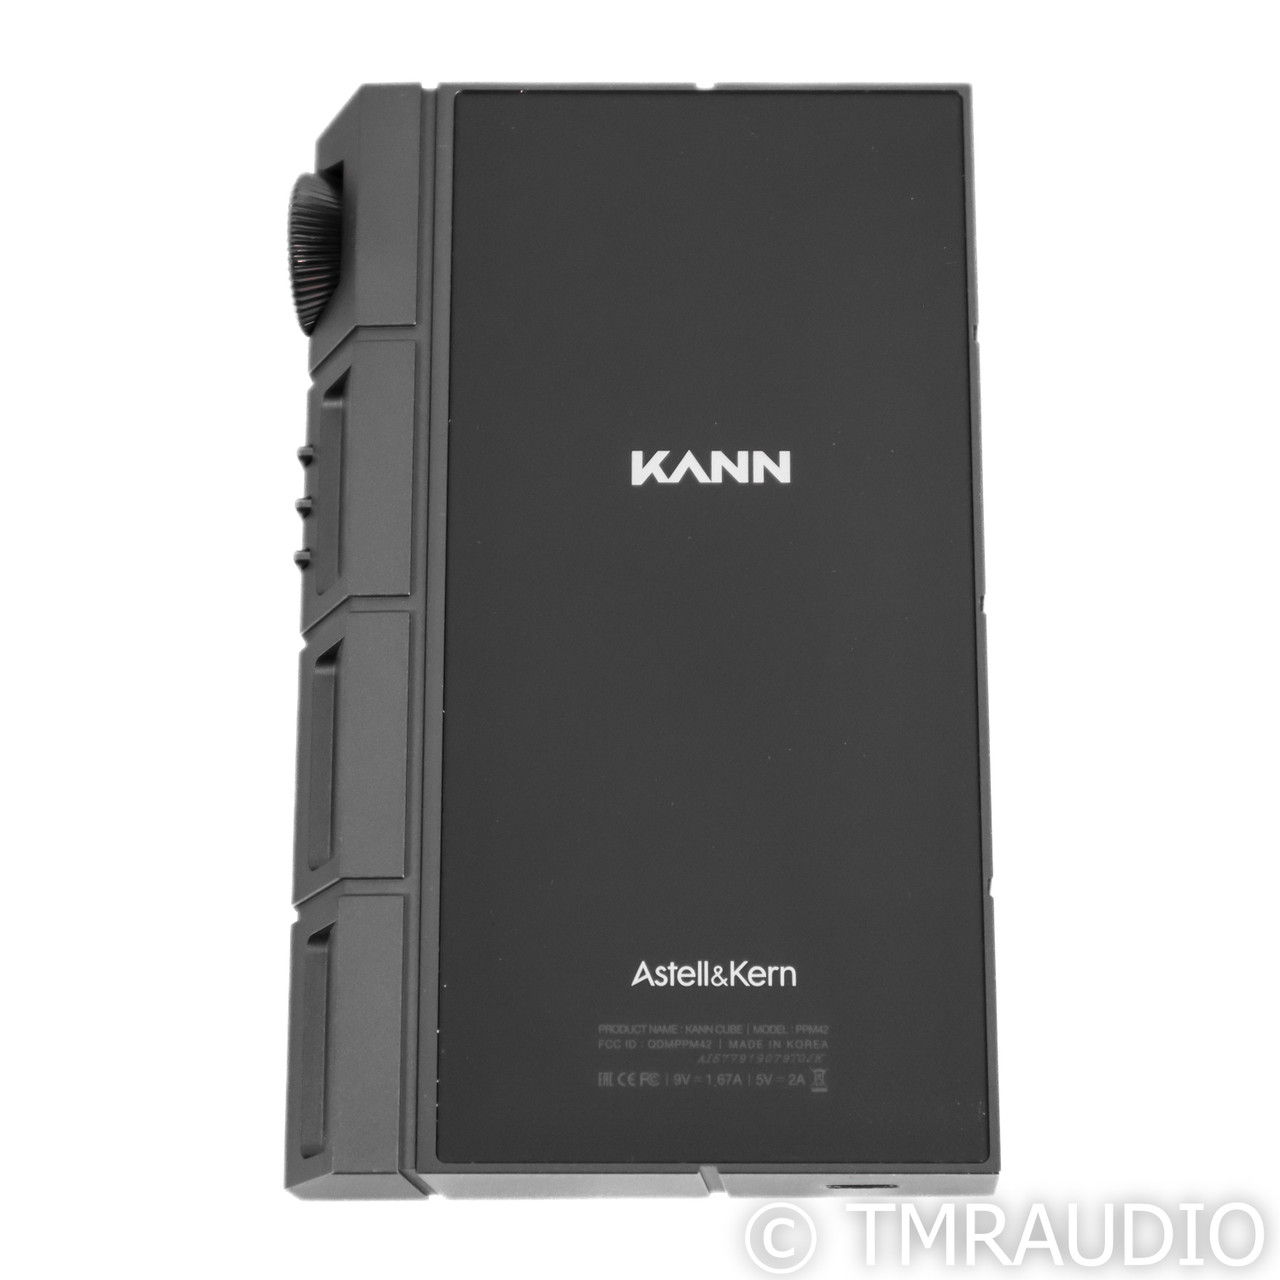 Astell & Kern KANN Cube Portable Music Player; 128GB (6... 9